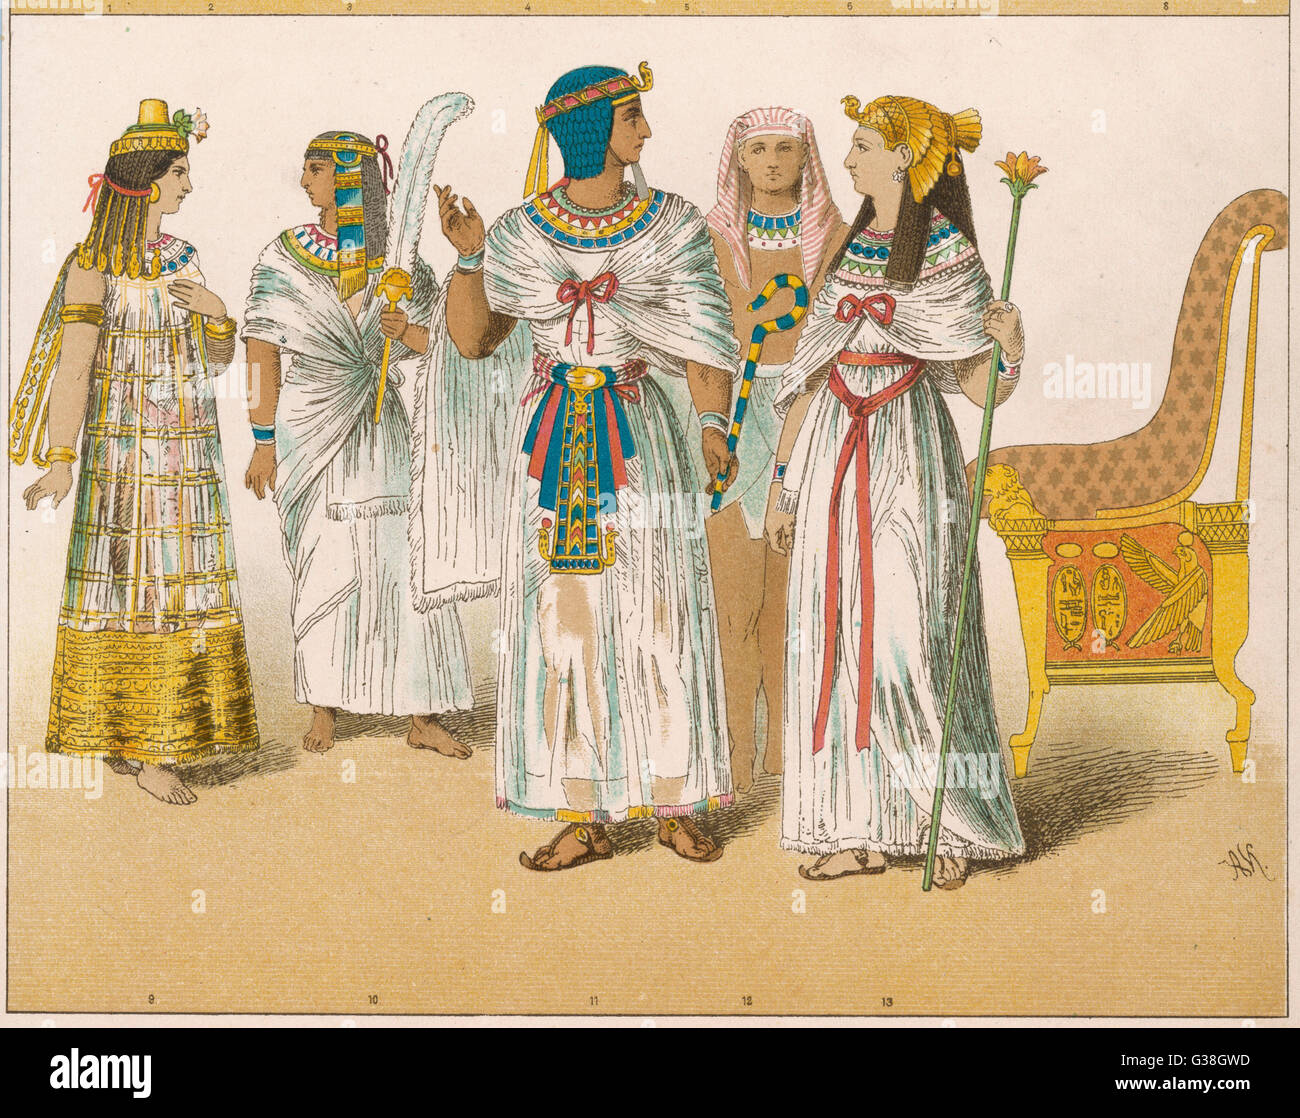 Girls Egyptian Pharaoh Queen Historical Carnival Book Day Fancy Dress  Costume